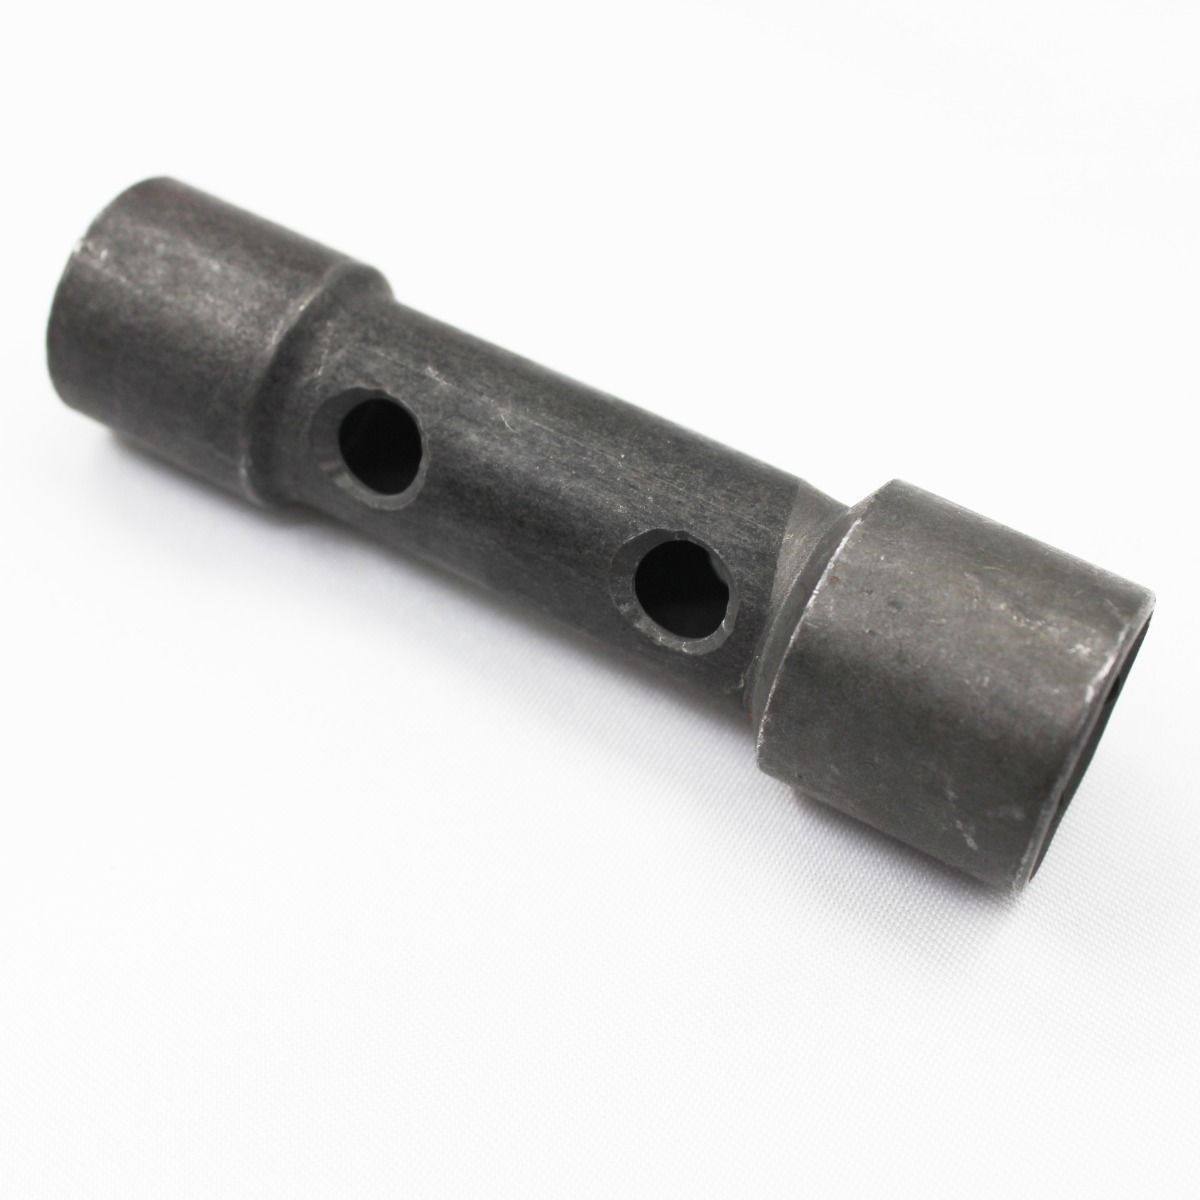 Double End Spark Plug Box Spanner 16mm 18mm Hexagonal Socket Wrench Hand Tool - TDRMOTO